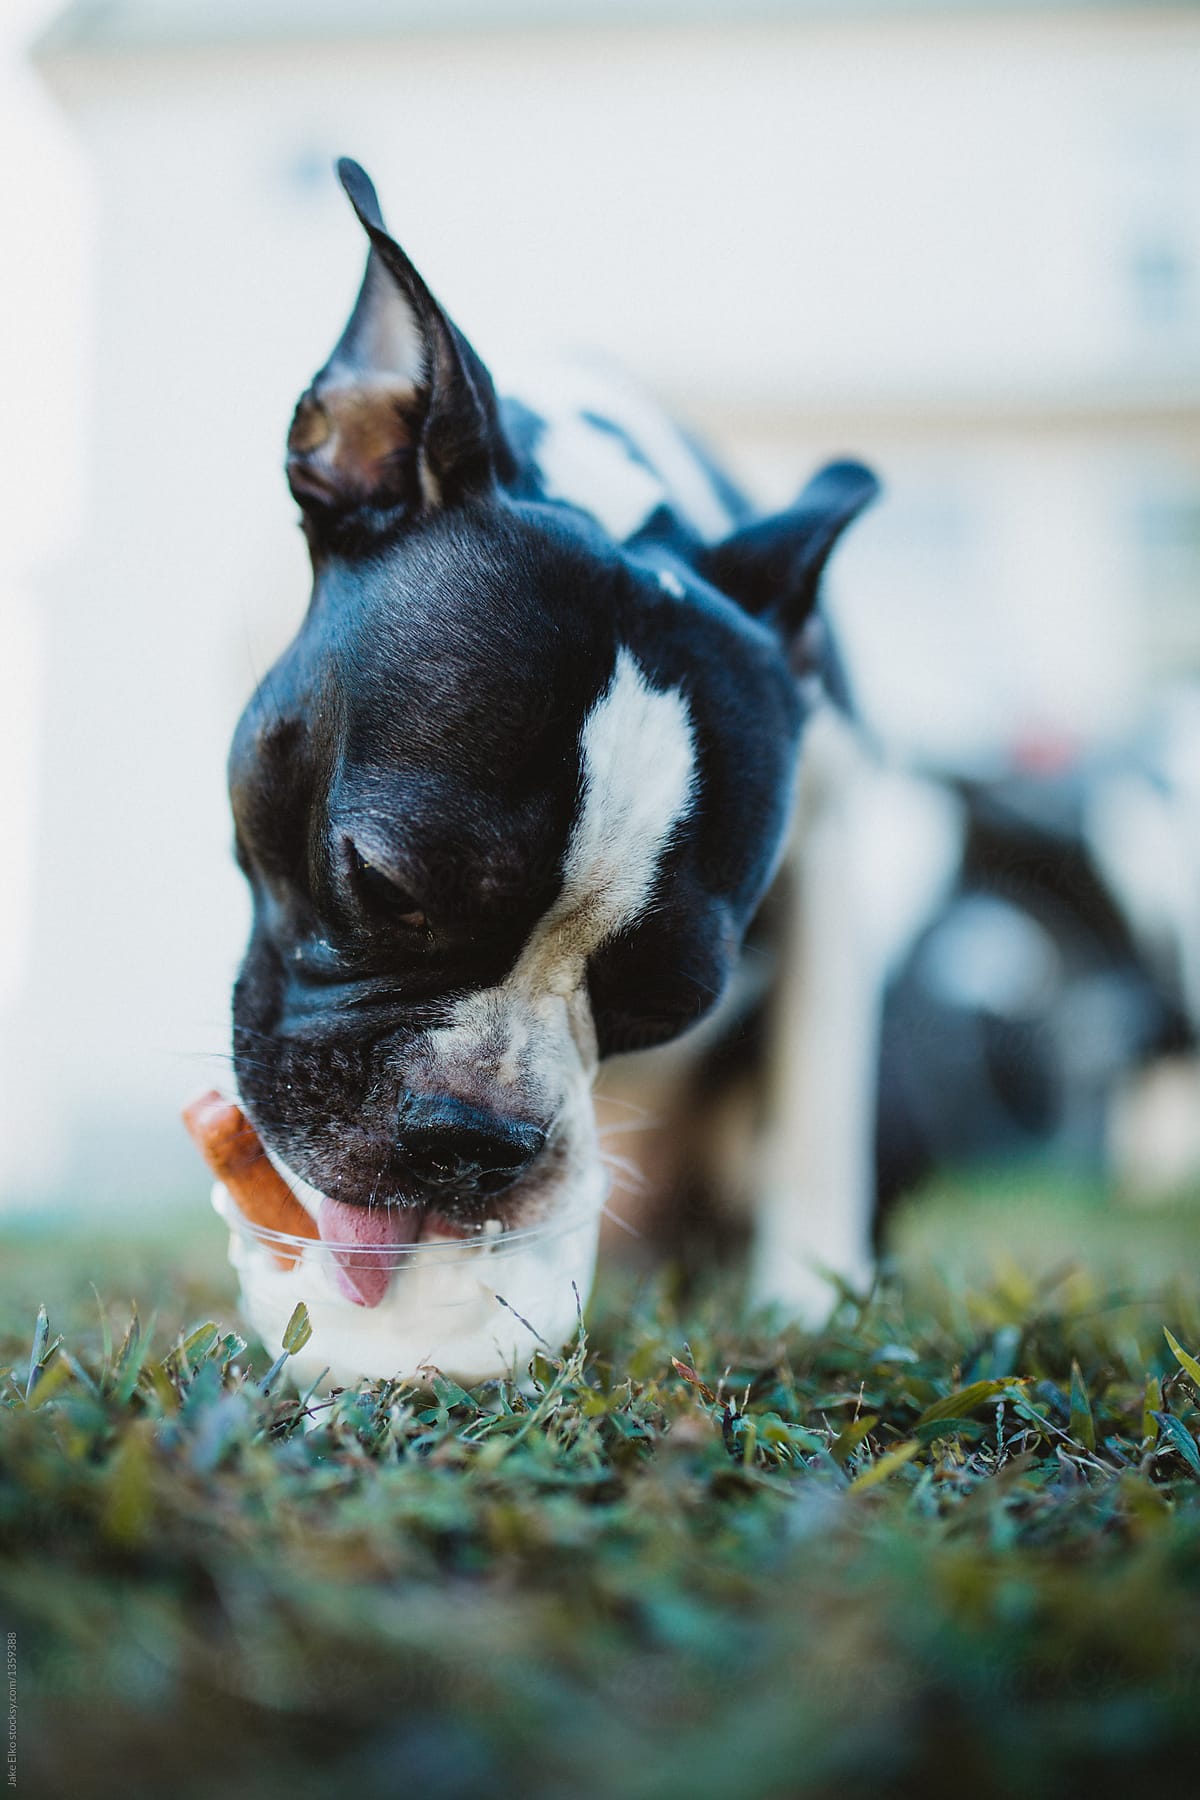 Dog is Eating Ice Cream On His Birthday